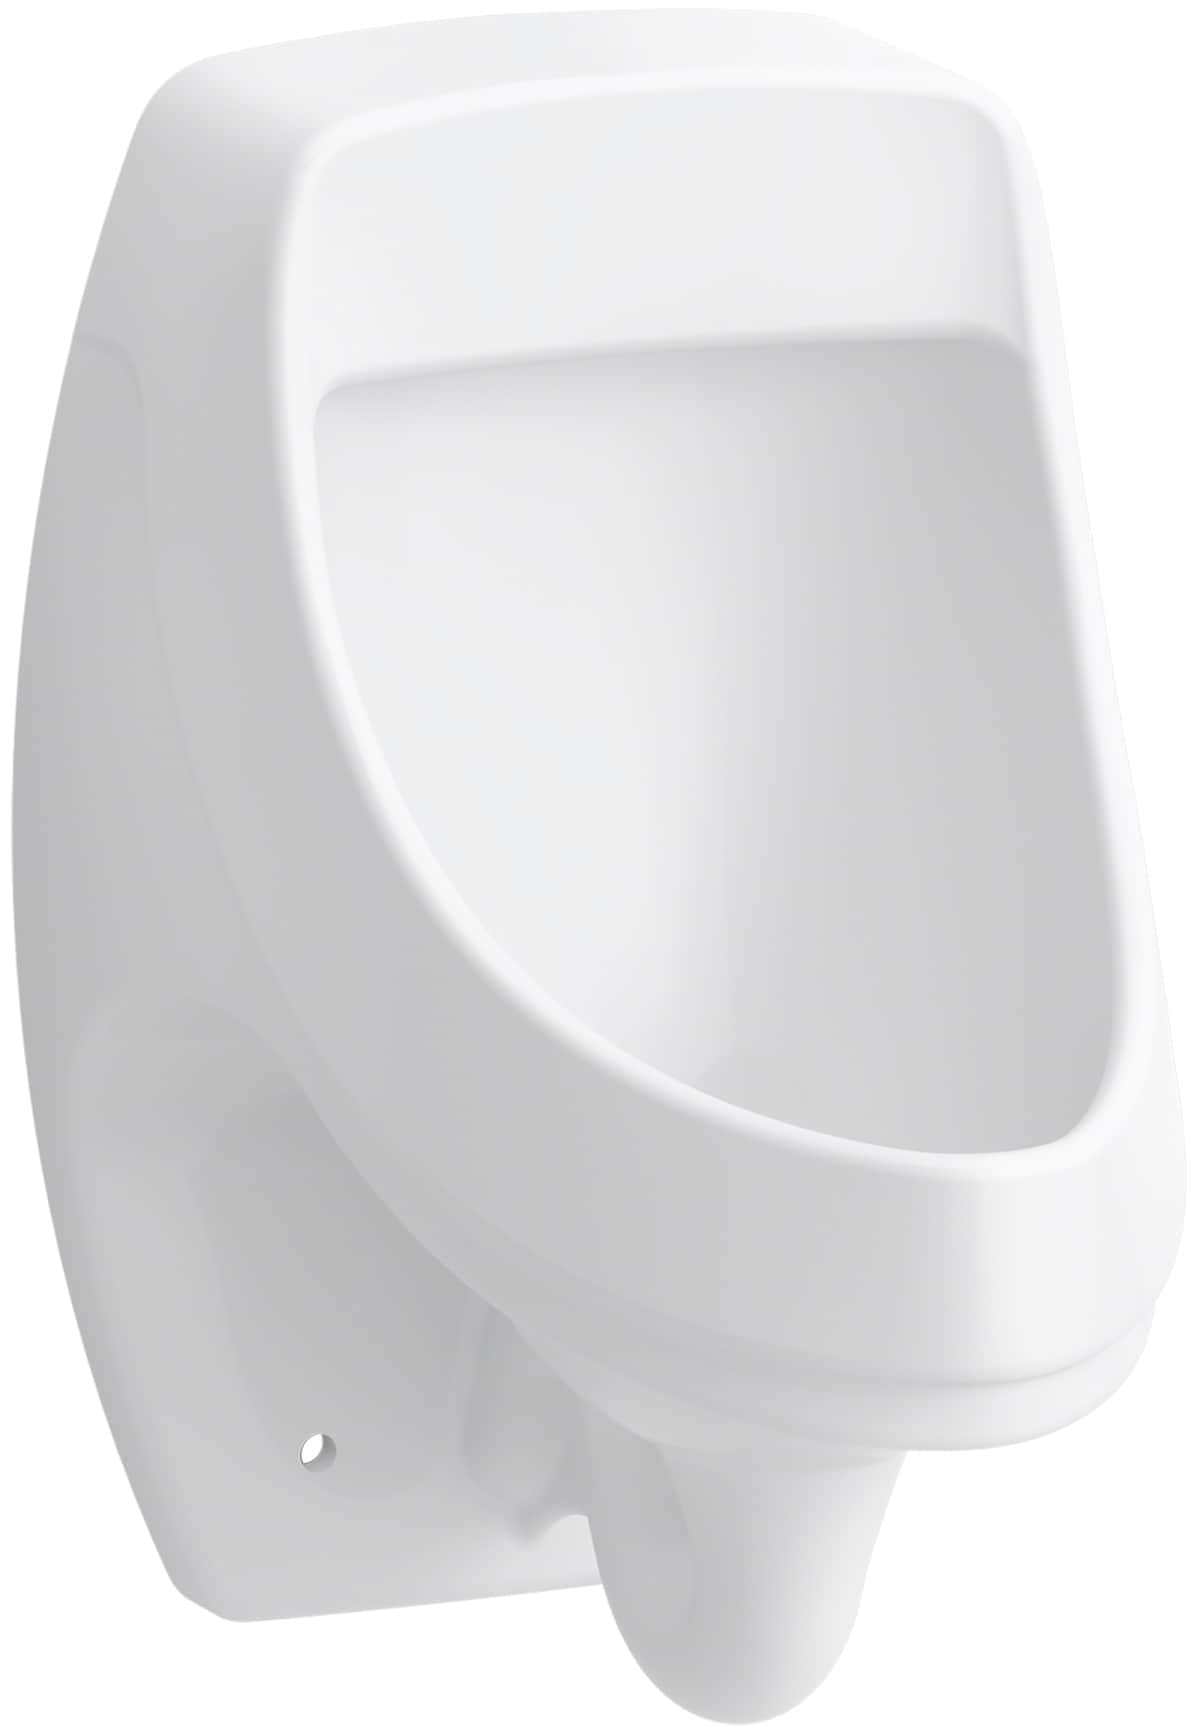 Sell Cheap Toilet WC Portable Urinoir